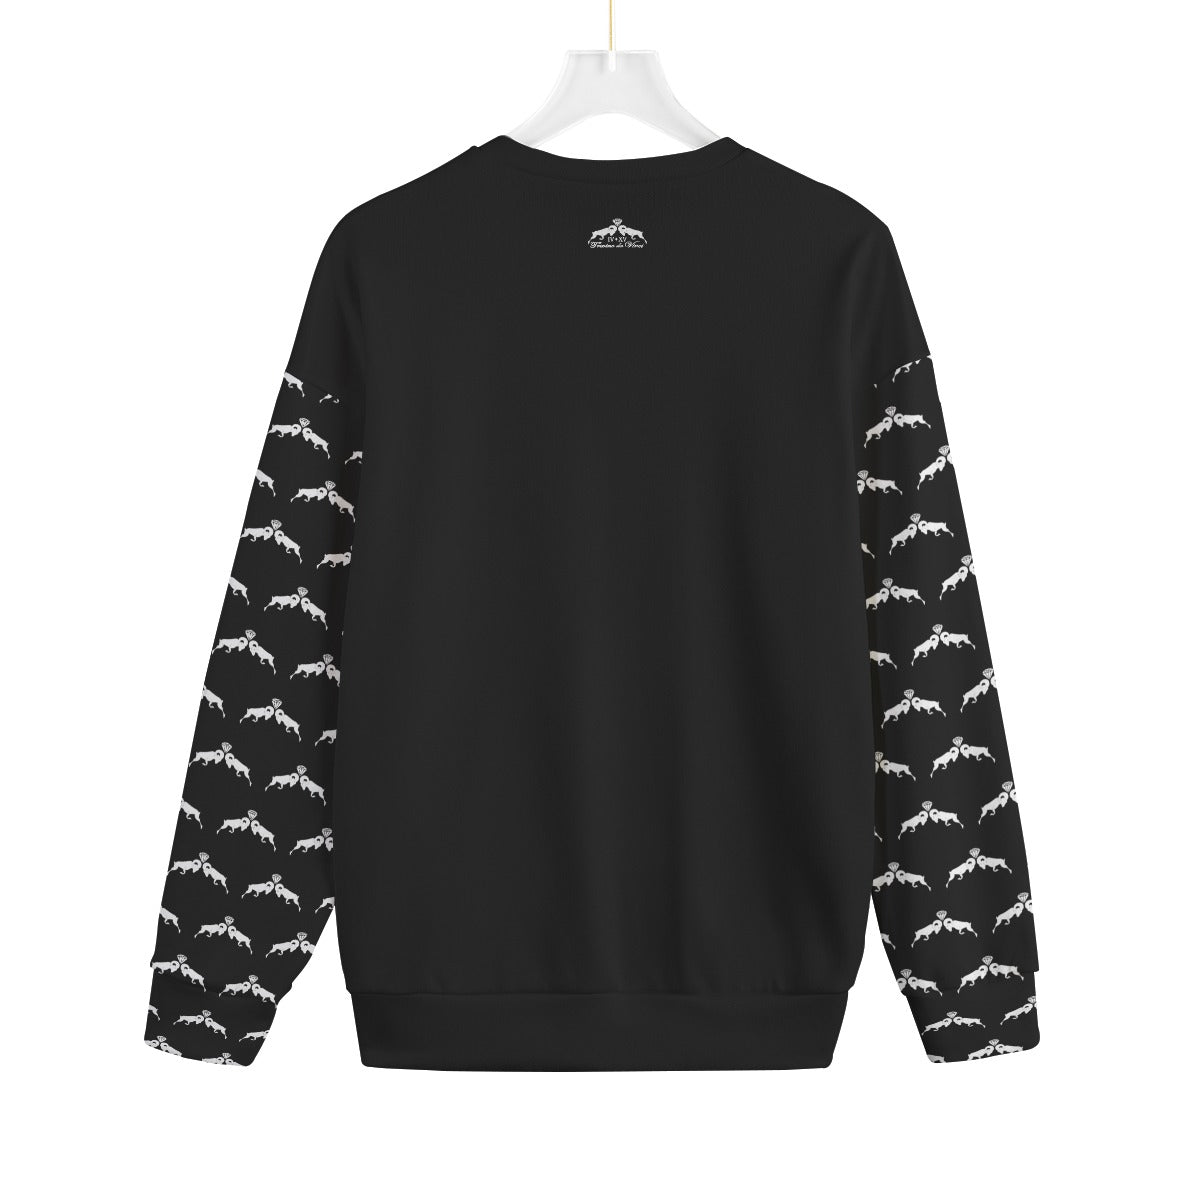 Black - IV XV Unisex Drop-shoulder Knitted Fleece Sweater